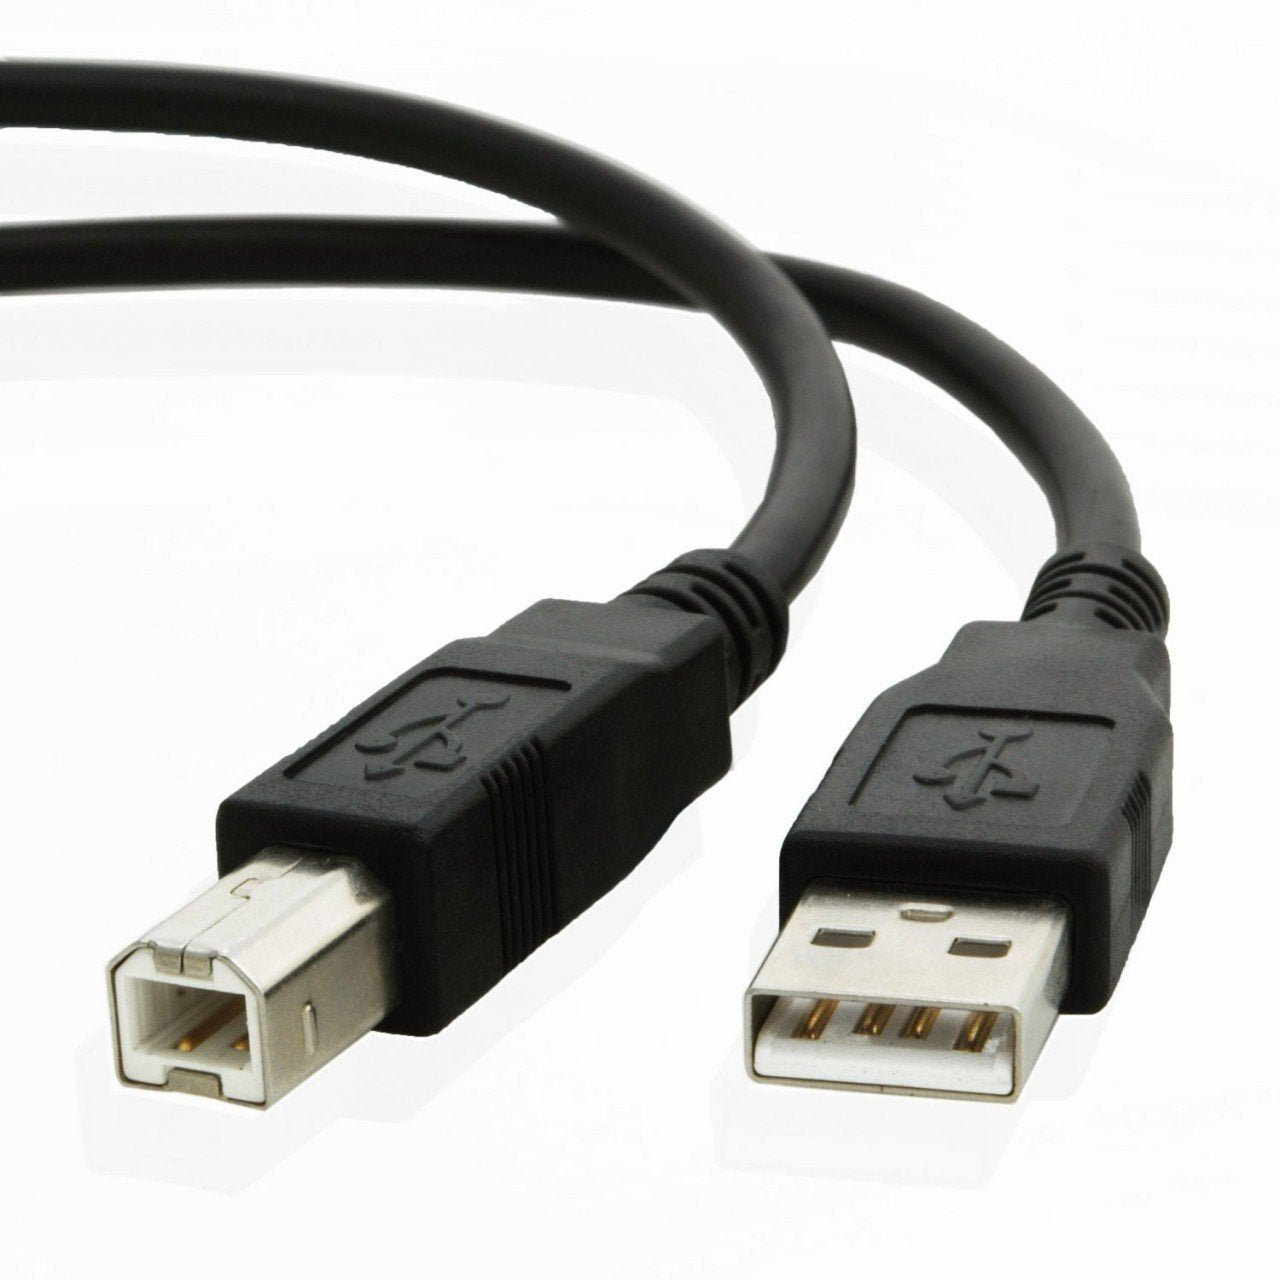 USB cable for Kawai DIGITAL PIANO MP11